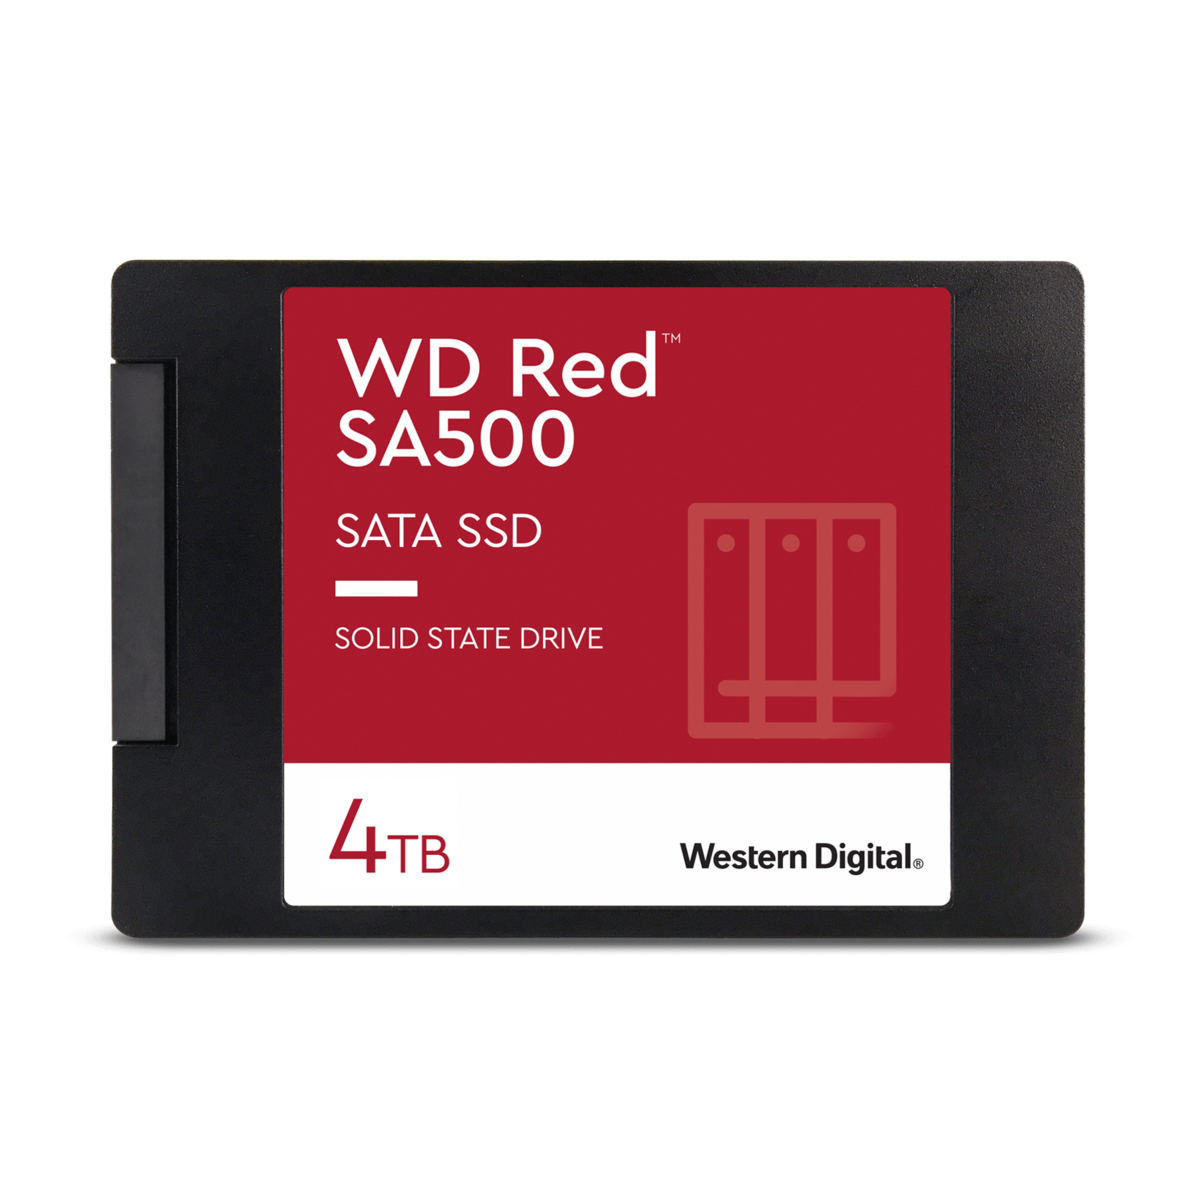 WD Red SA500 NAS SATA SSD WDS400T1R0A - Solid state drive - 4 TB - internal  - 2.5-inch - SATA 6Gb/s